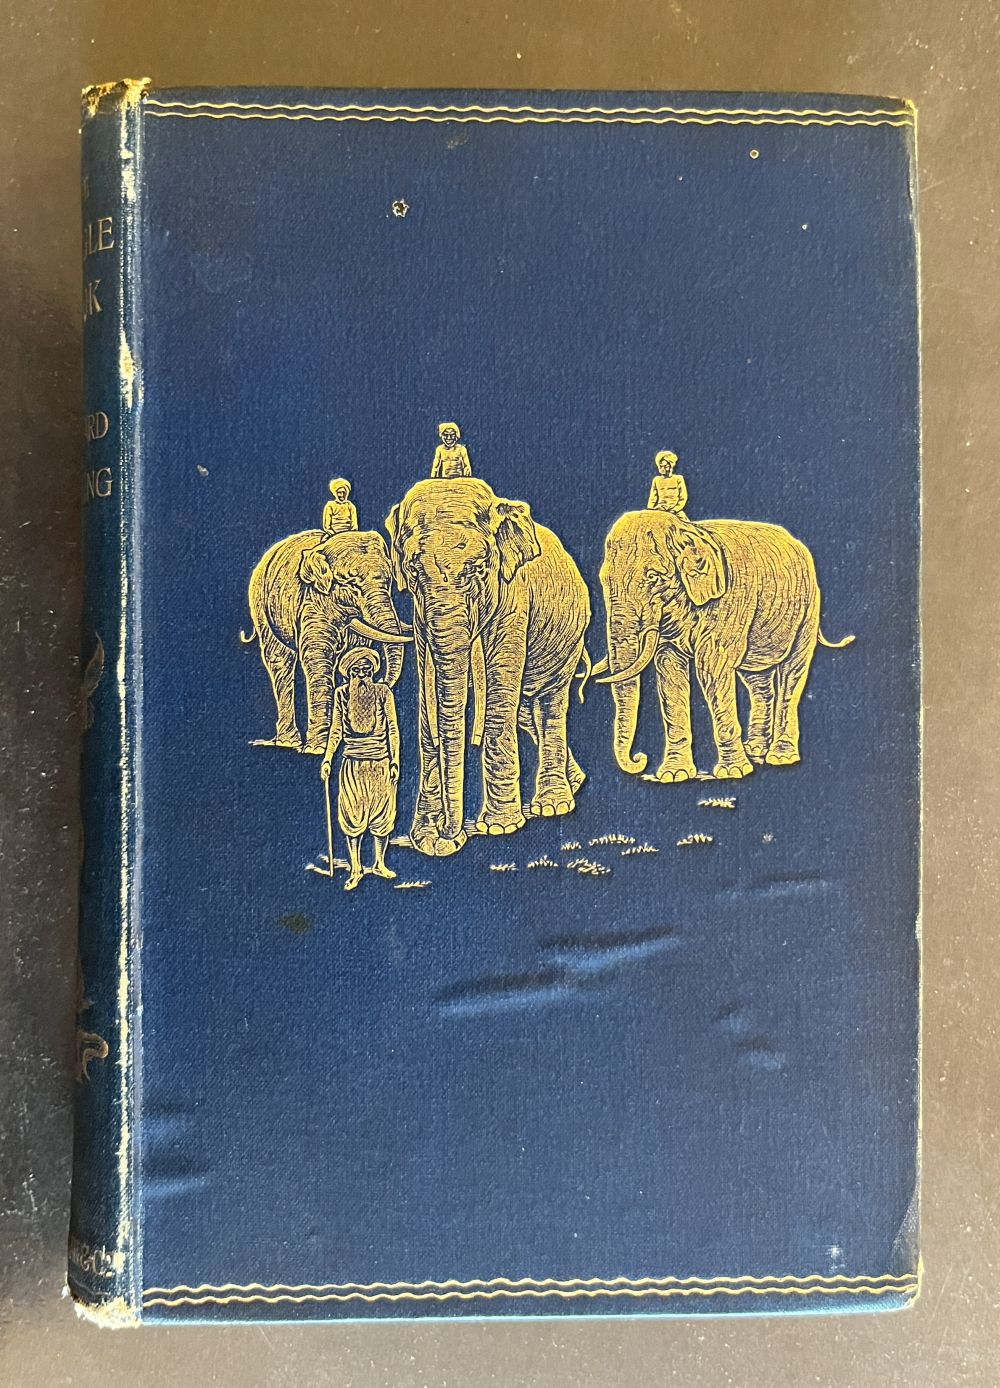 Kipling (Rudyard). The Jungle Book, 1st edition, 1894 - Image 2 of 13